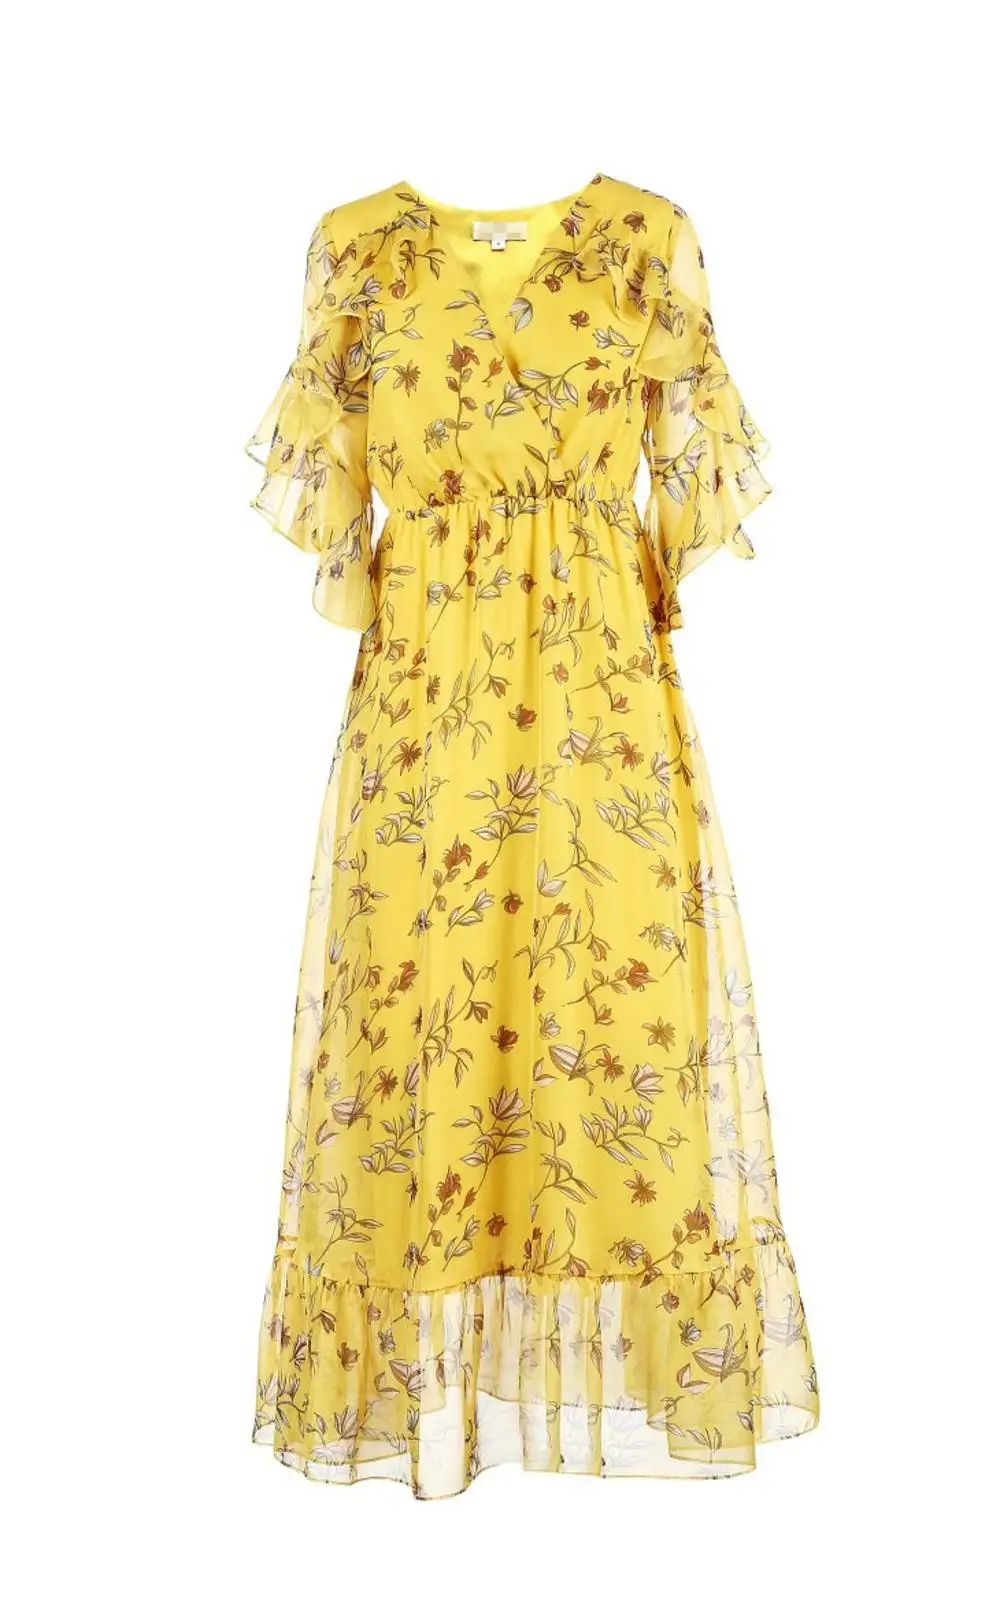 Summer Flower Printed Fashion Dress Women - Buy Fashion Dress,Dress ...